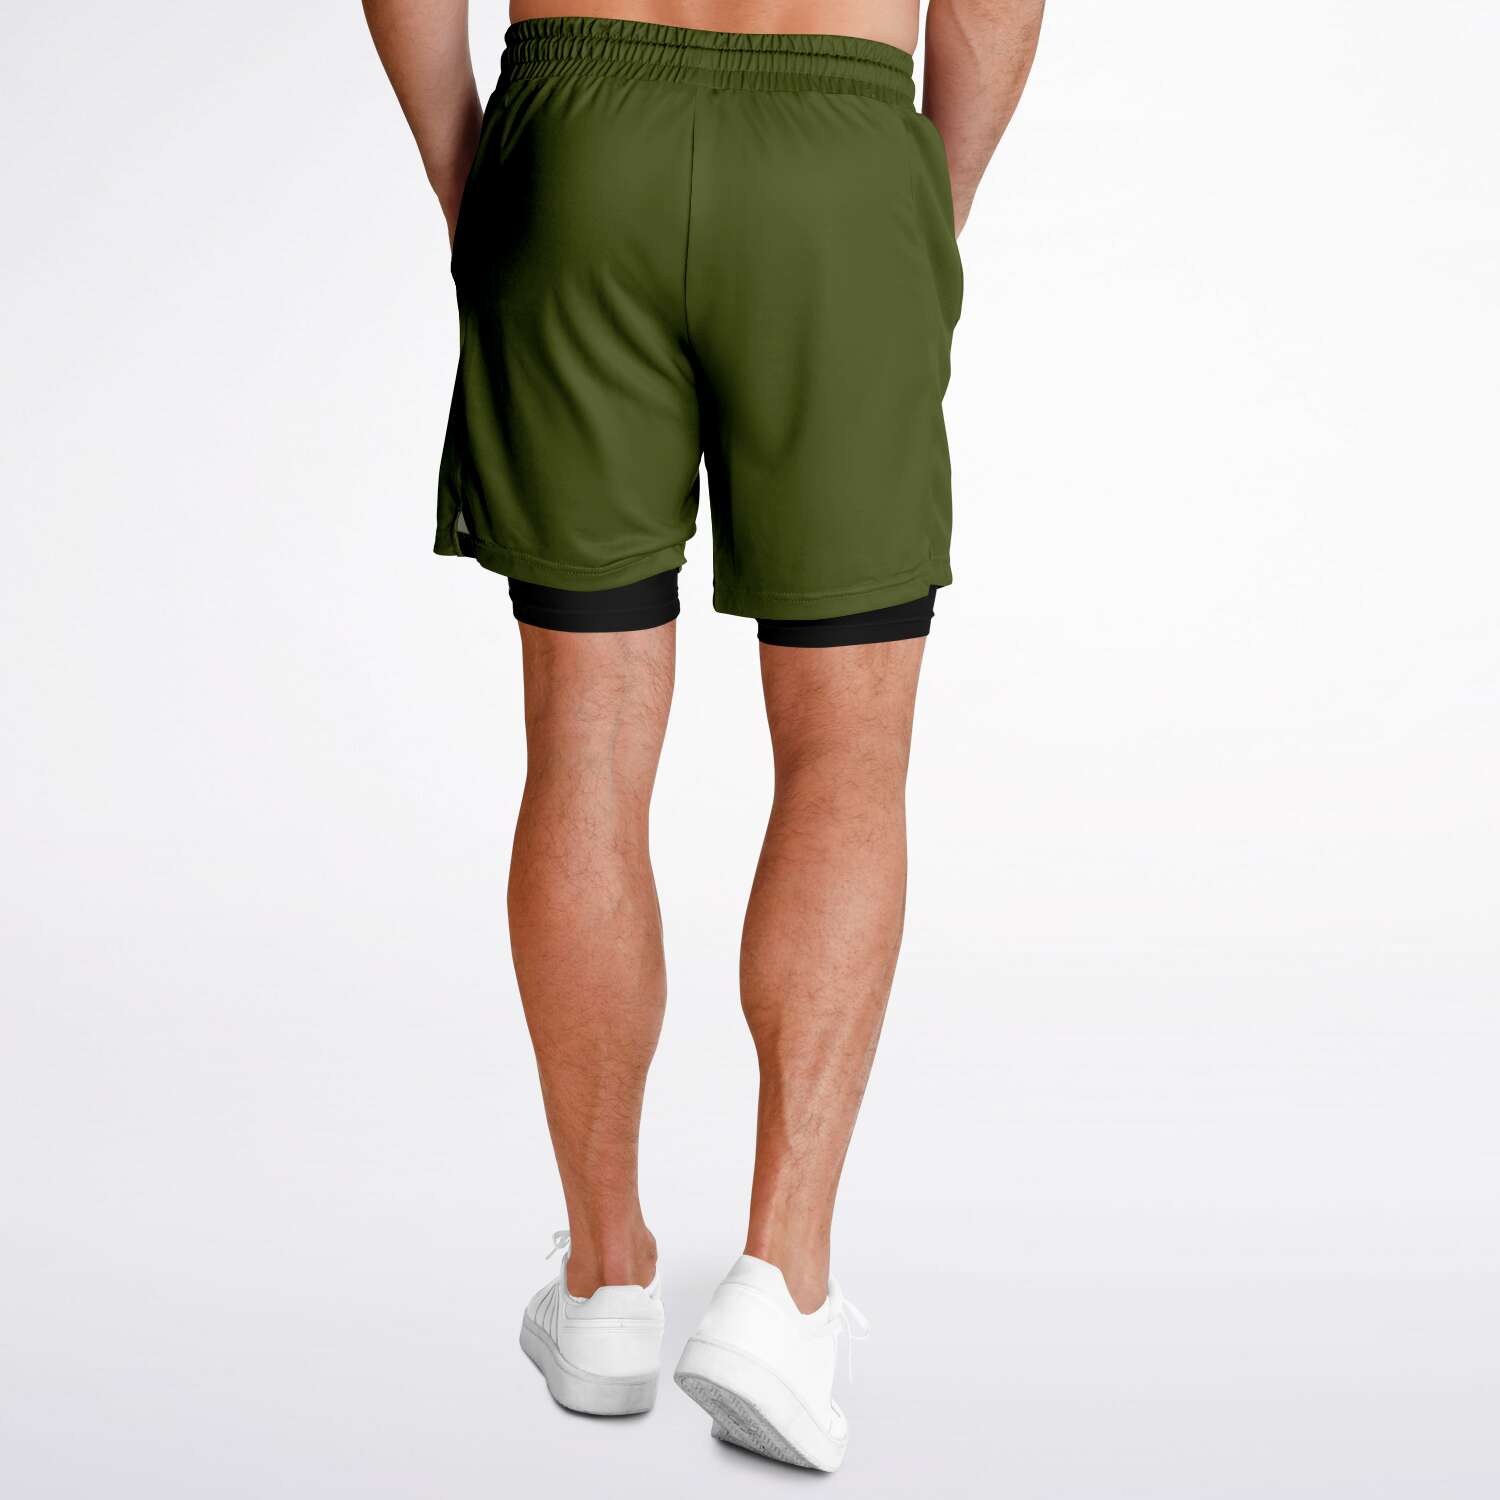 Army Green Shorts